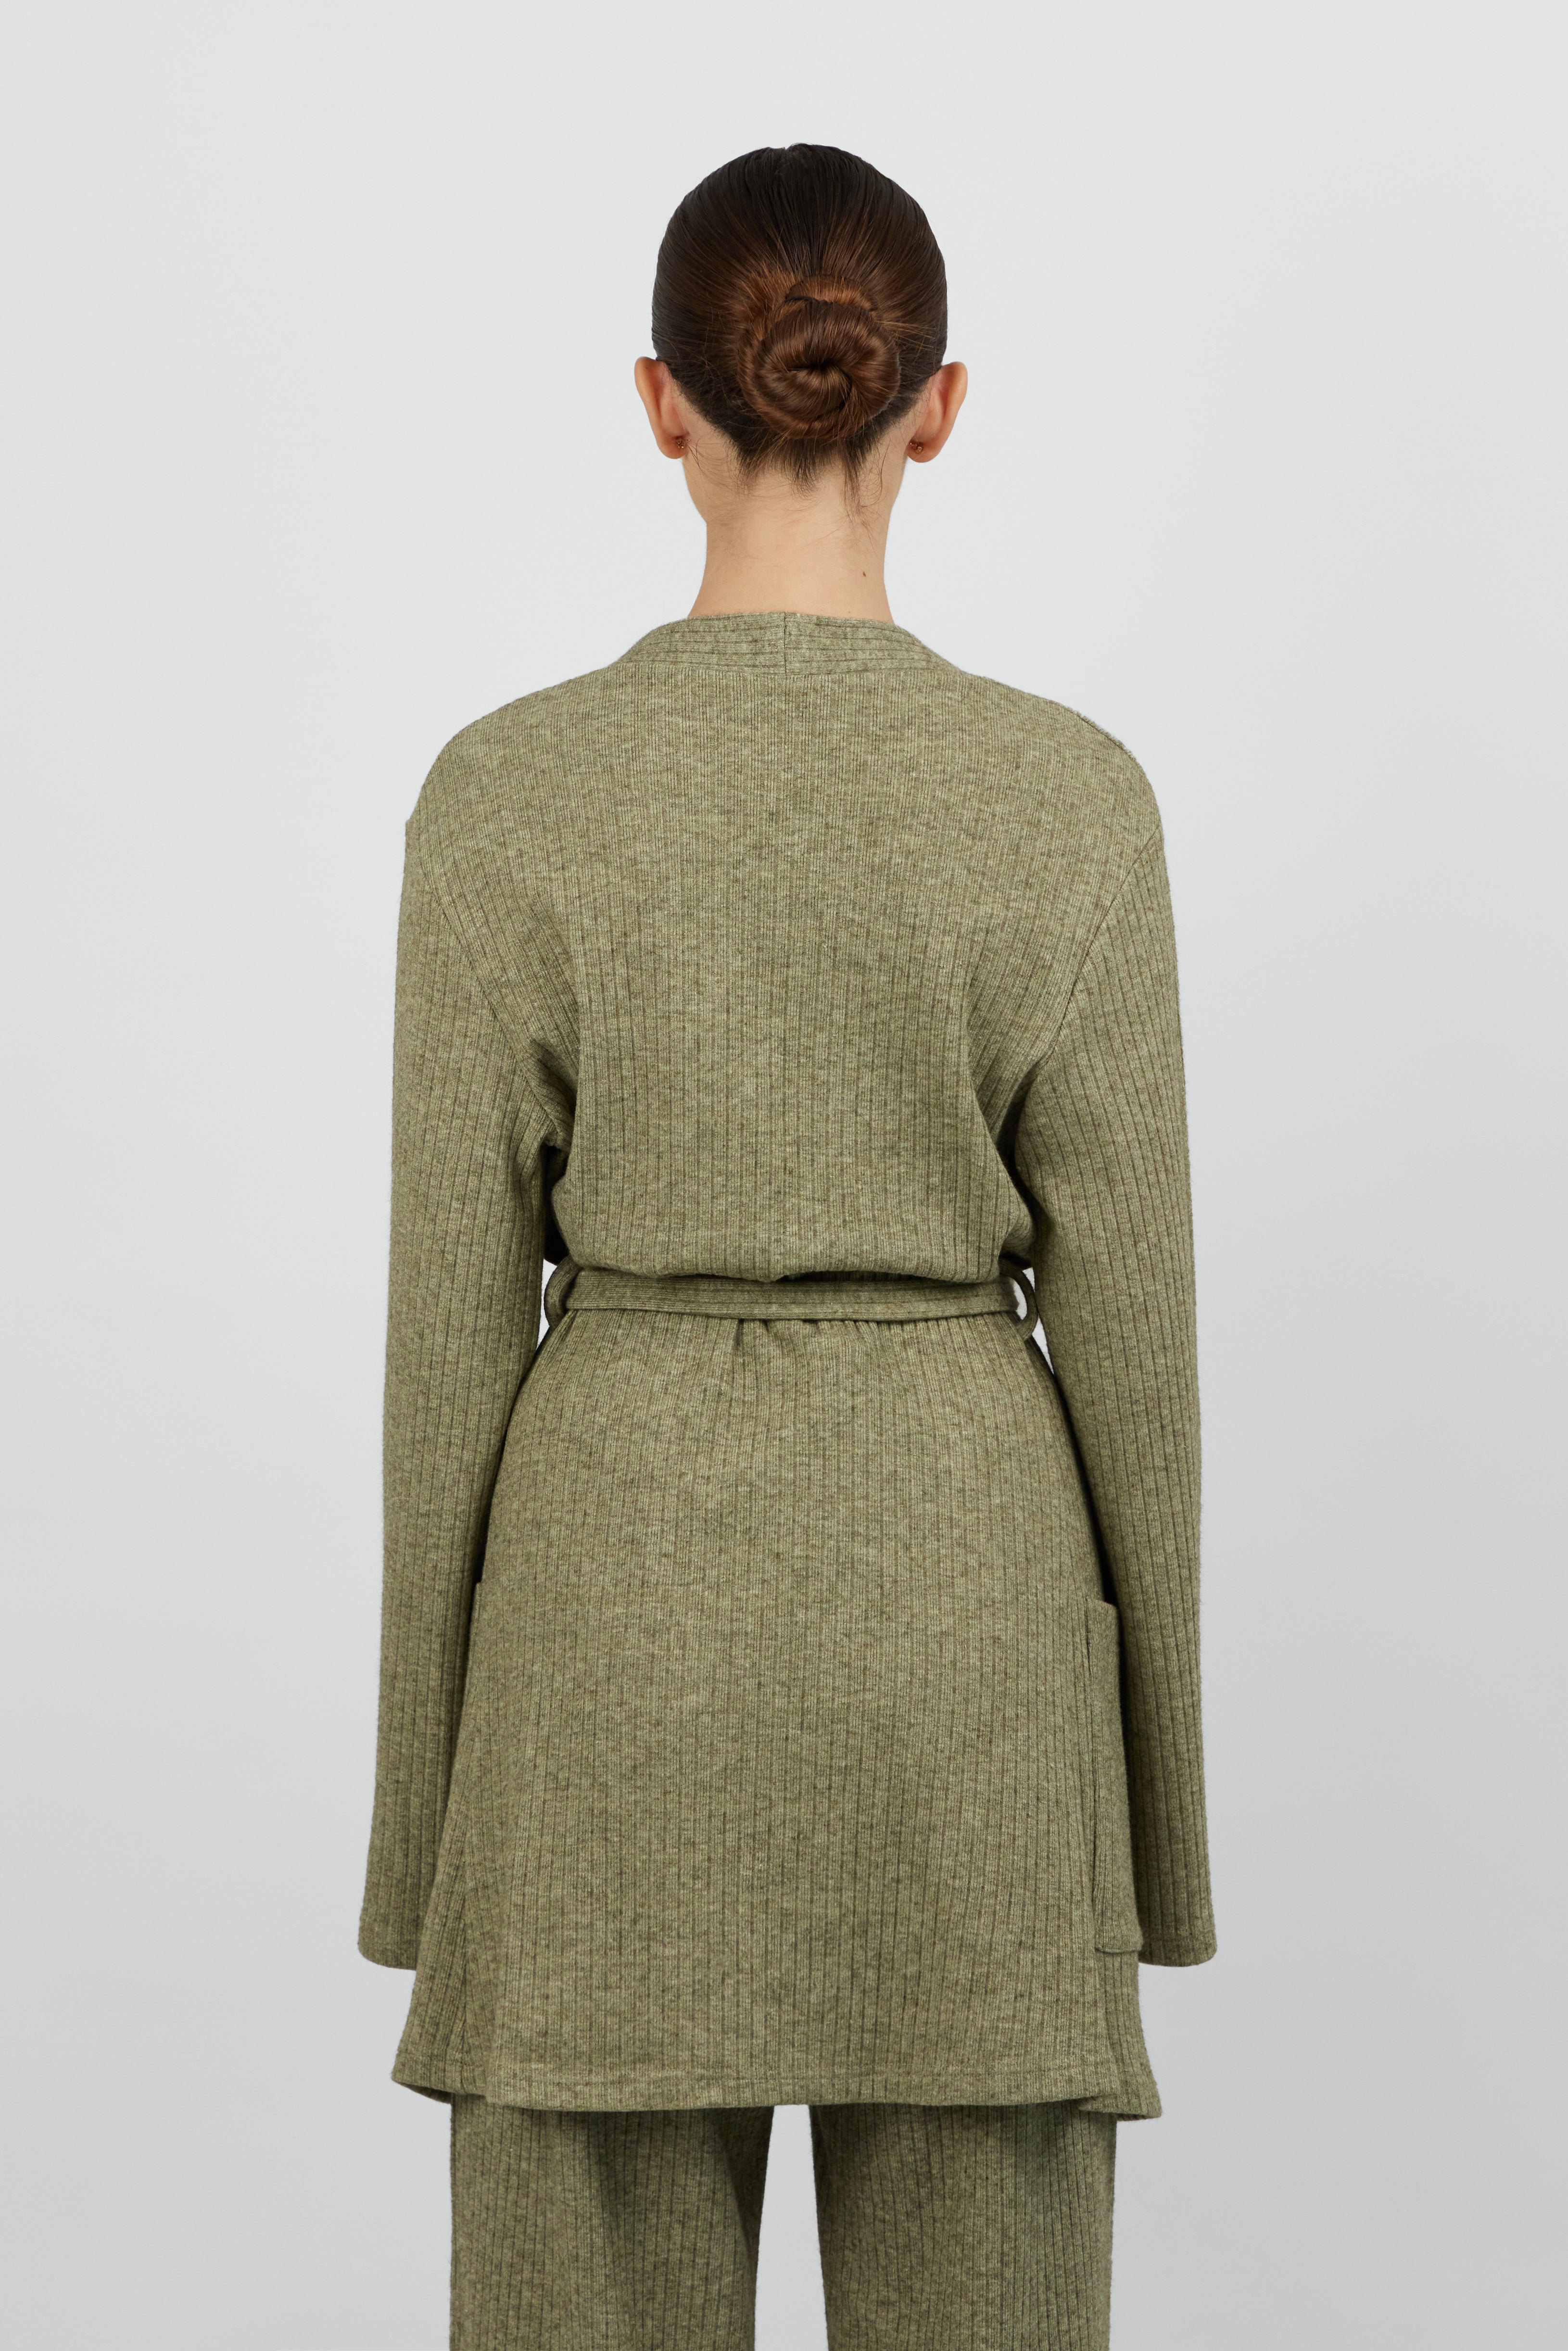 US - Knit Belted Cardigan - Olive